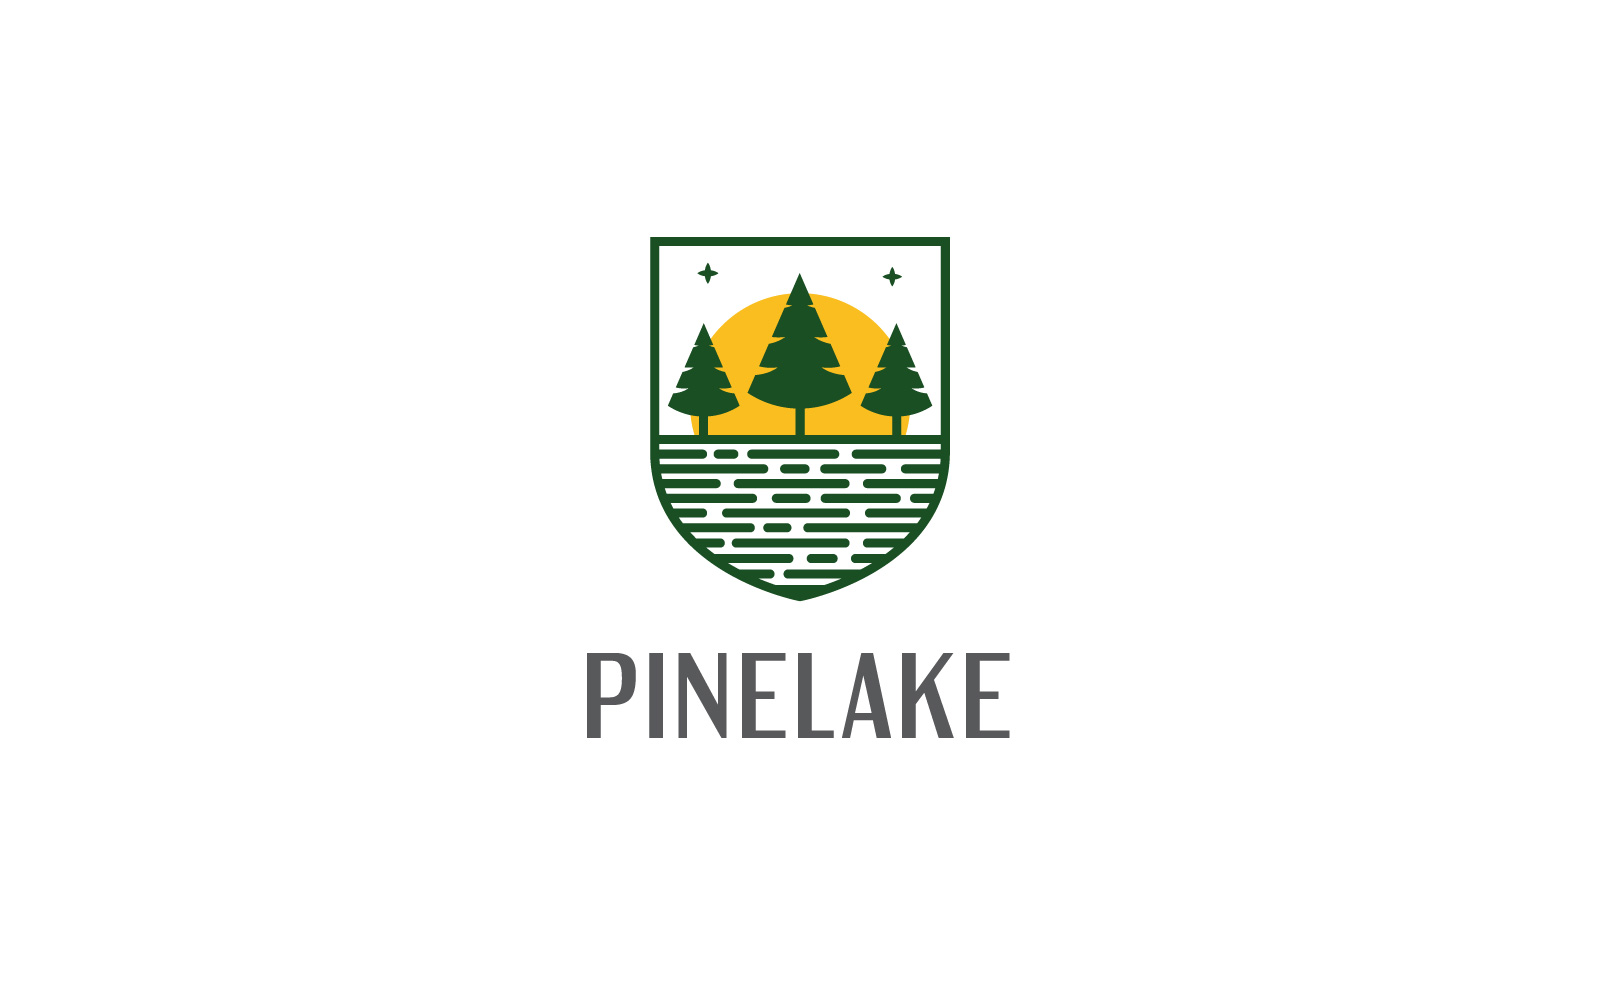 Pine lake Outdoor Nature Landscape Logo design template